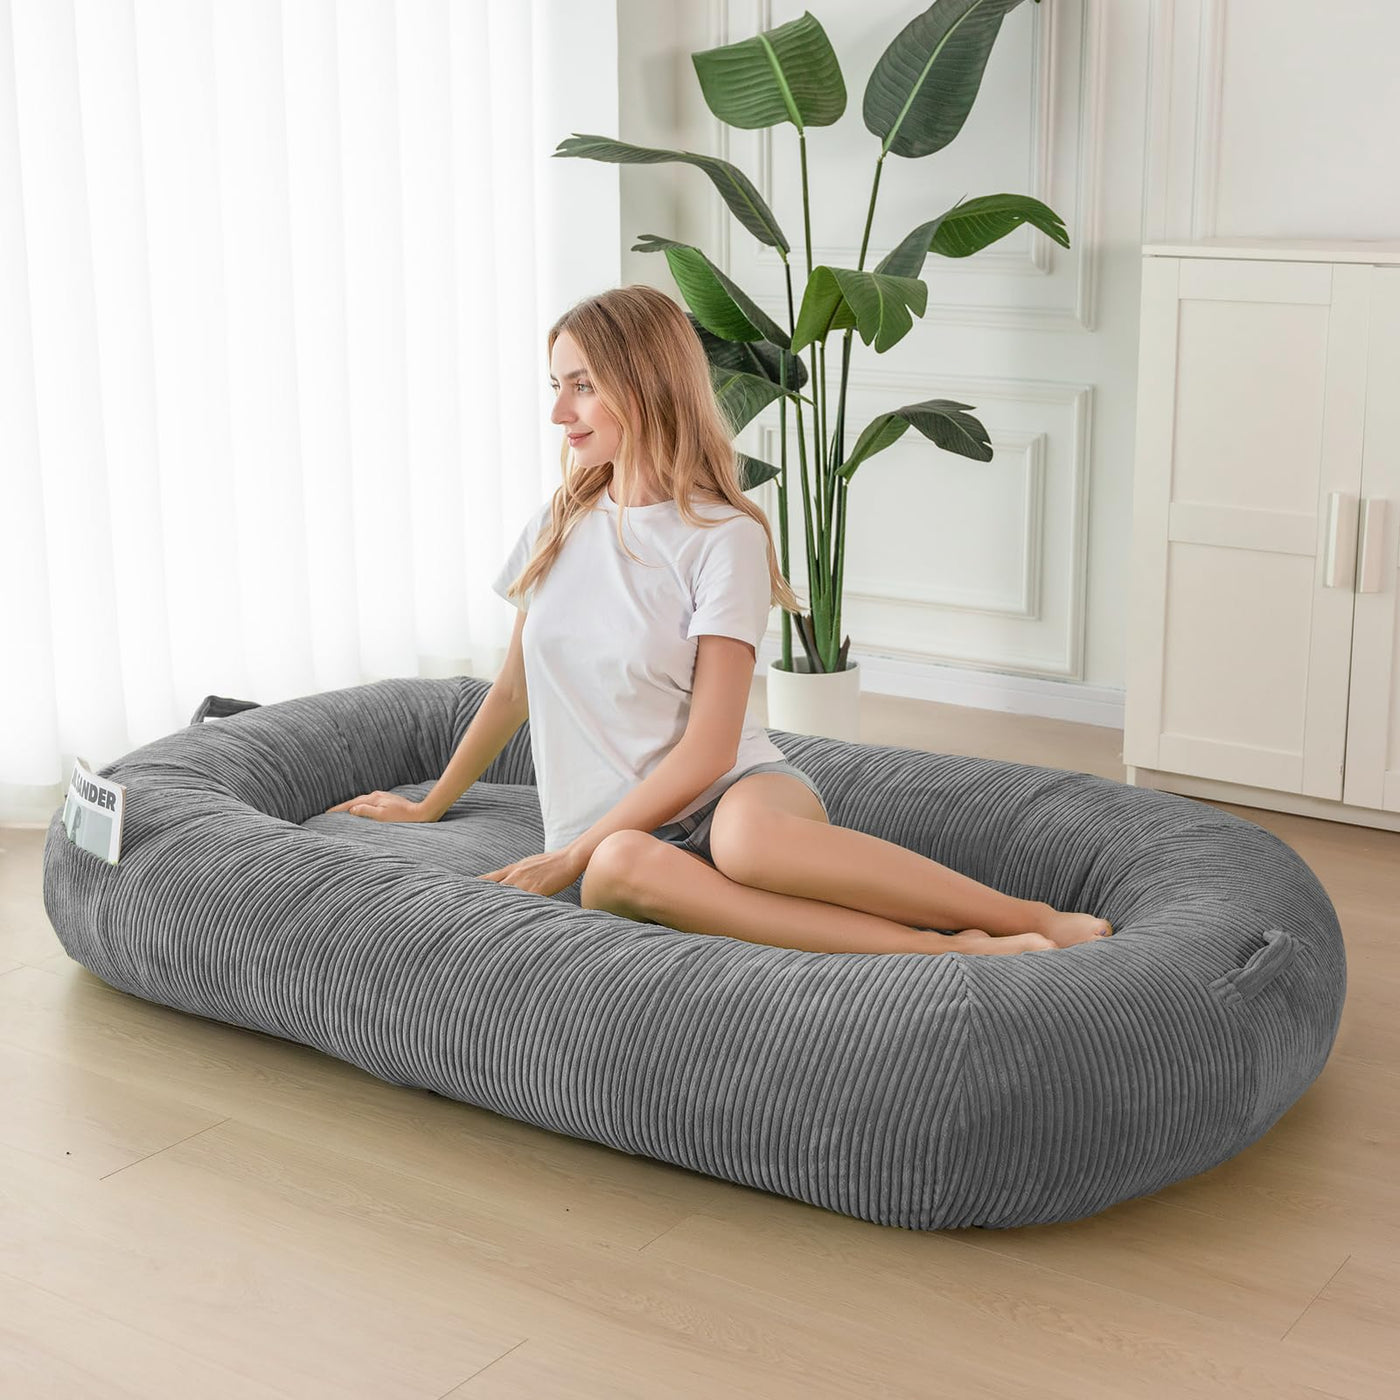 MAXYOYO Human Dog Bed, Corduroy Giant Bean Bag Dog Bed for Humans and Pets, Dark Grey